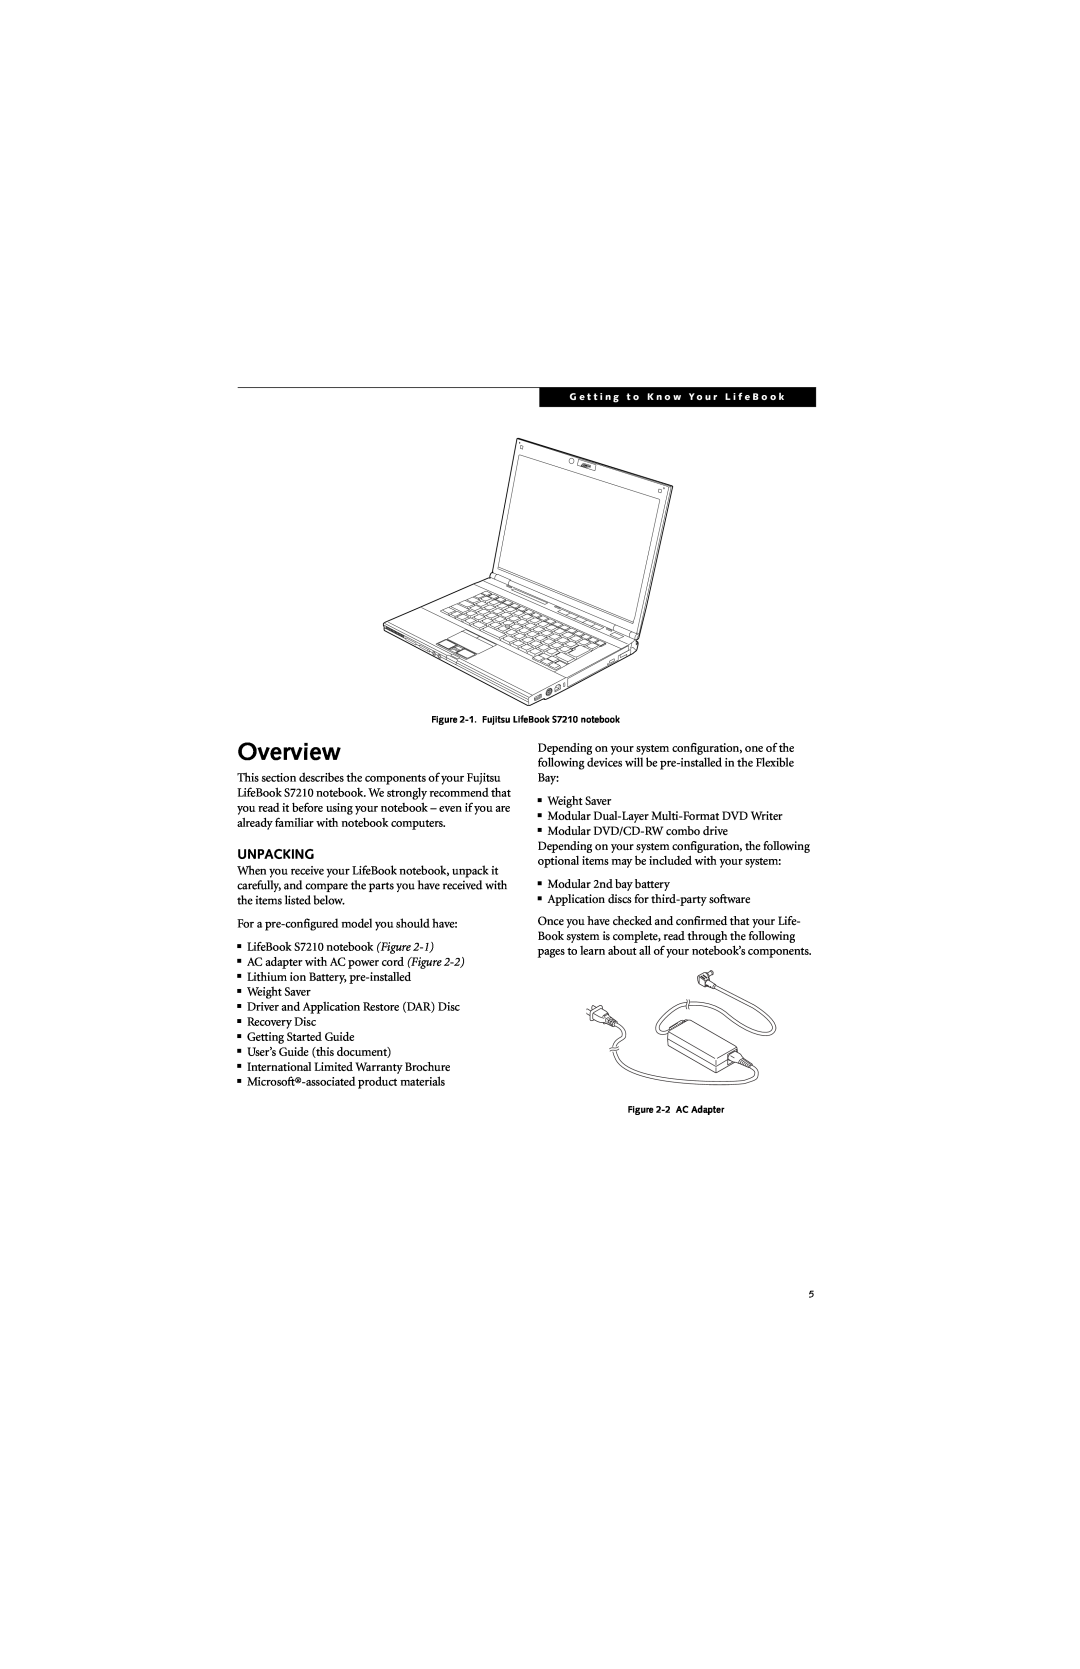 Fujitsu S7210 manual Overview, Unpacking 